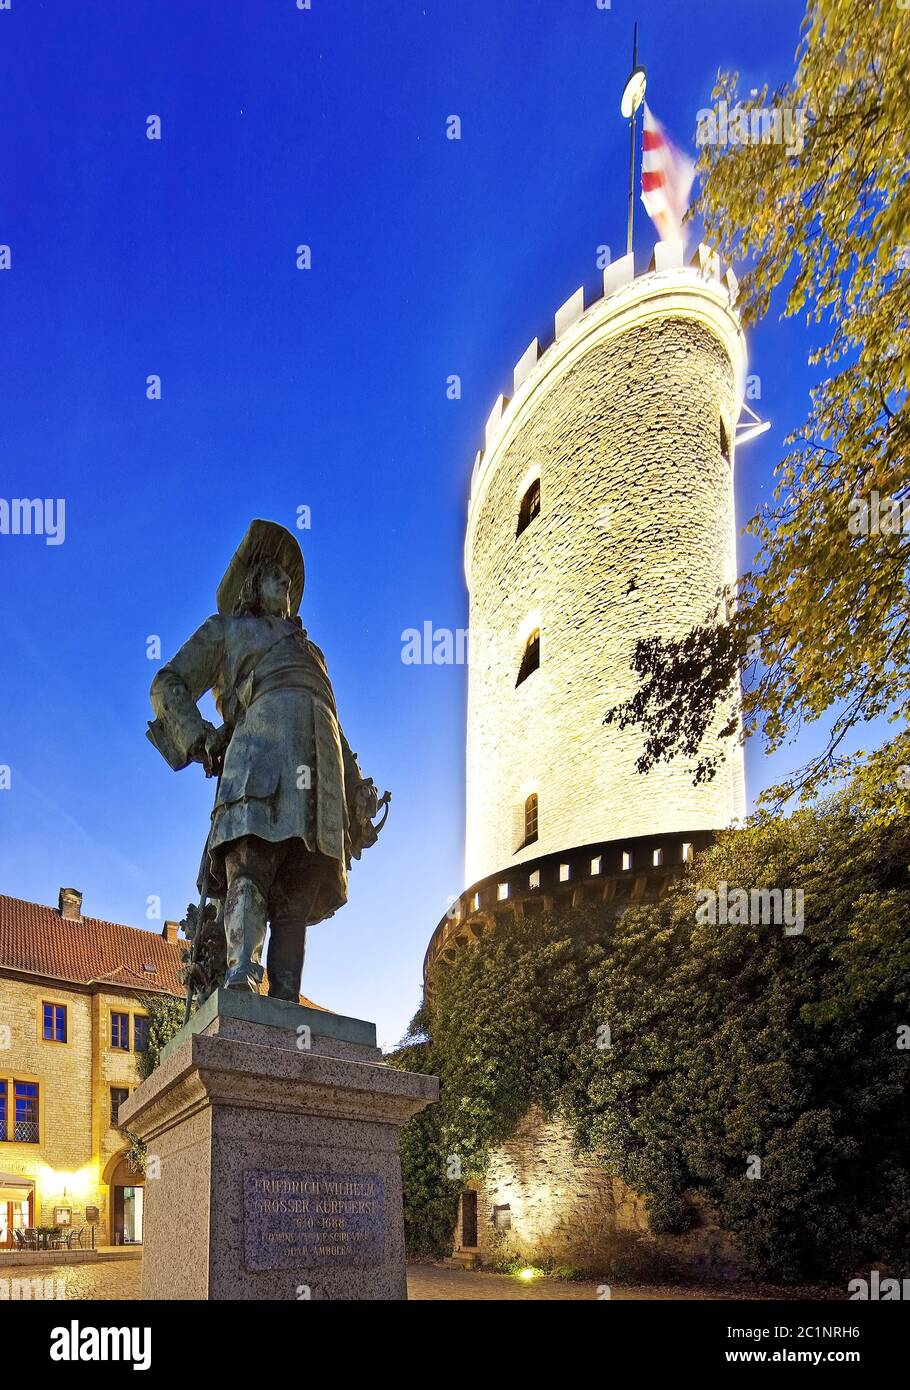 illuminated Sparrenburg Castle and statue of Friedrich Wilhelm, Bielefeld, Germany, Europe Stock Photo